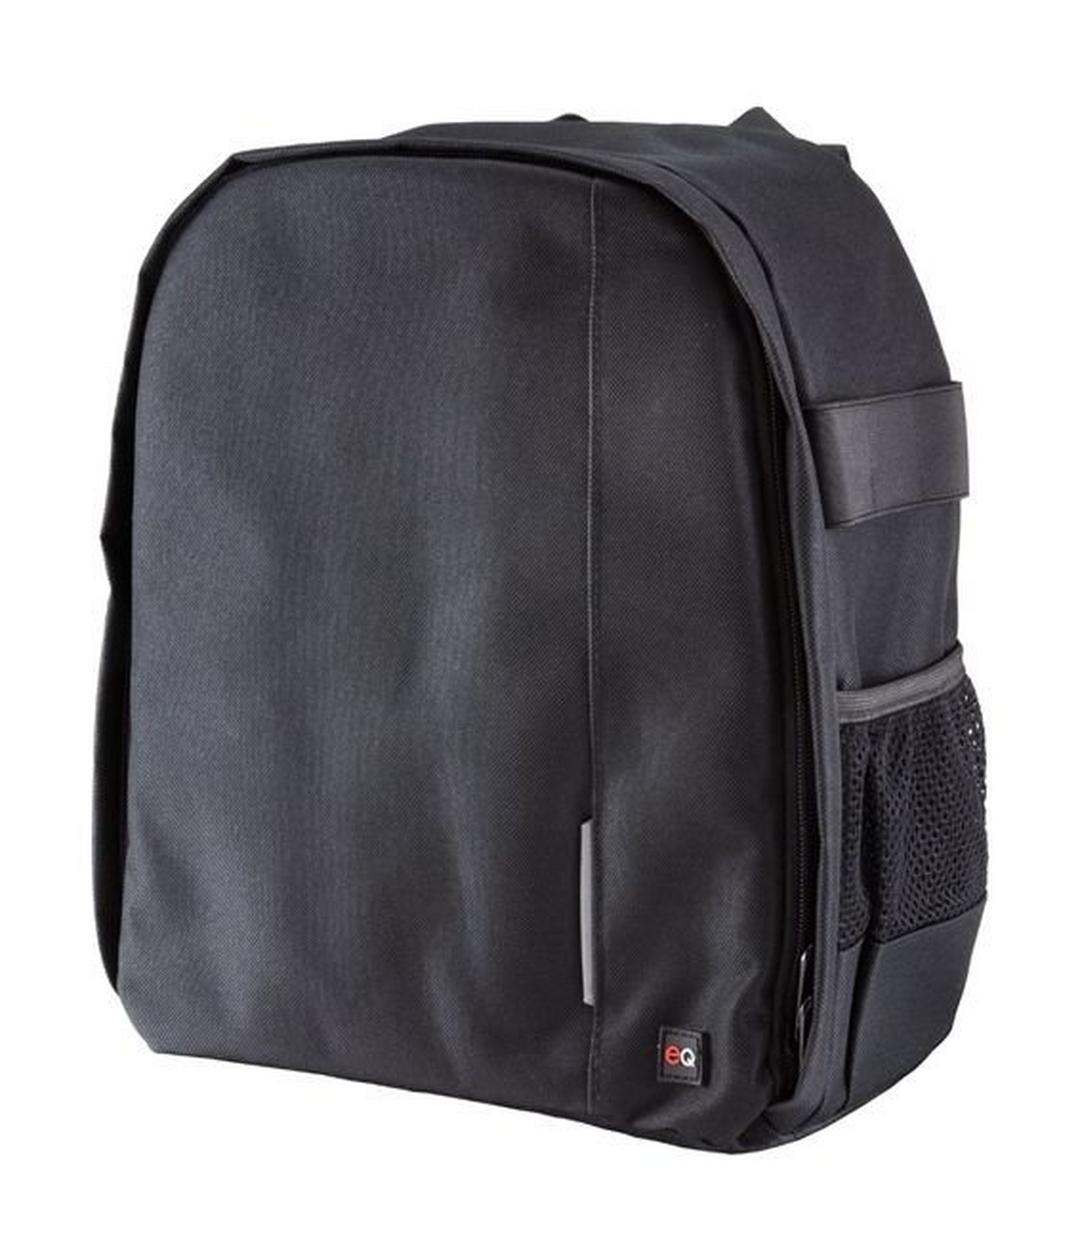 EQ SLR Camera Backpack -Black/Grey